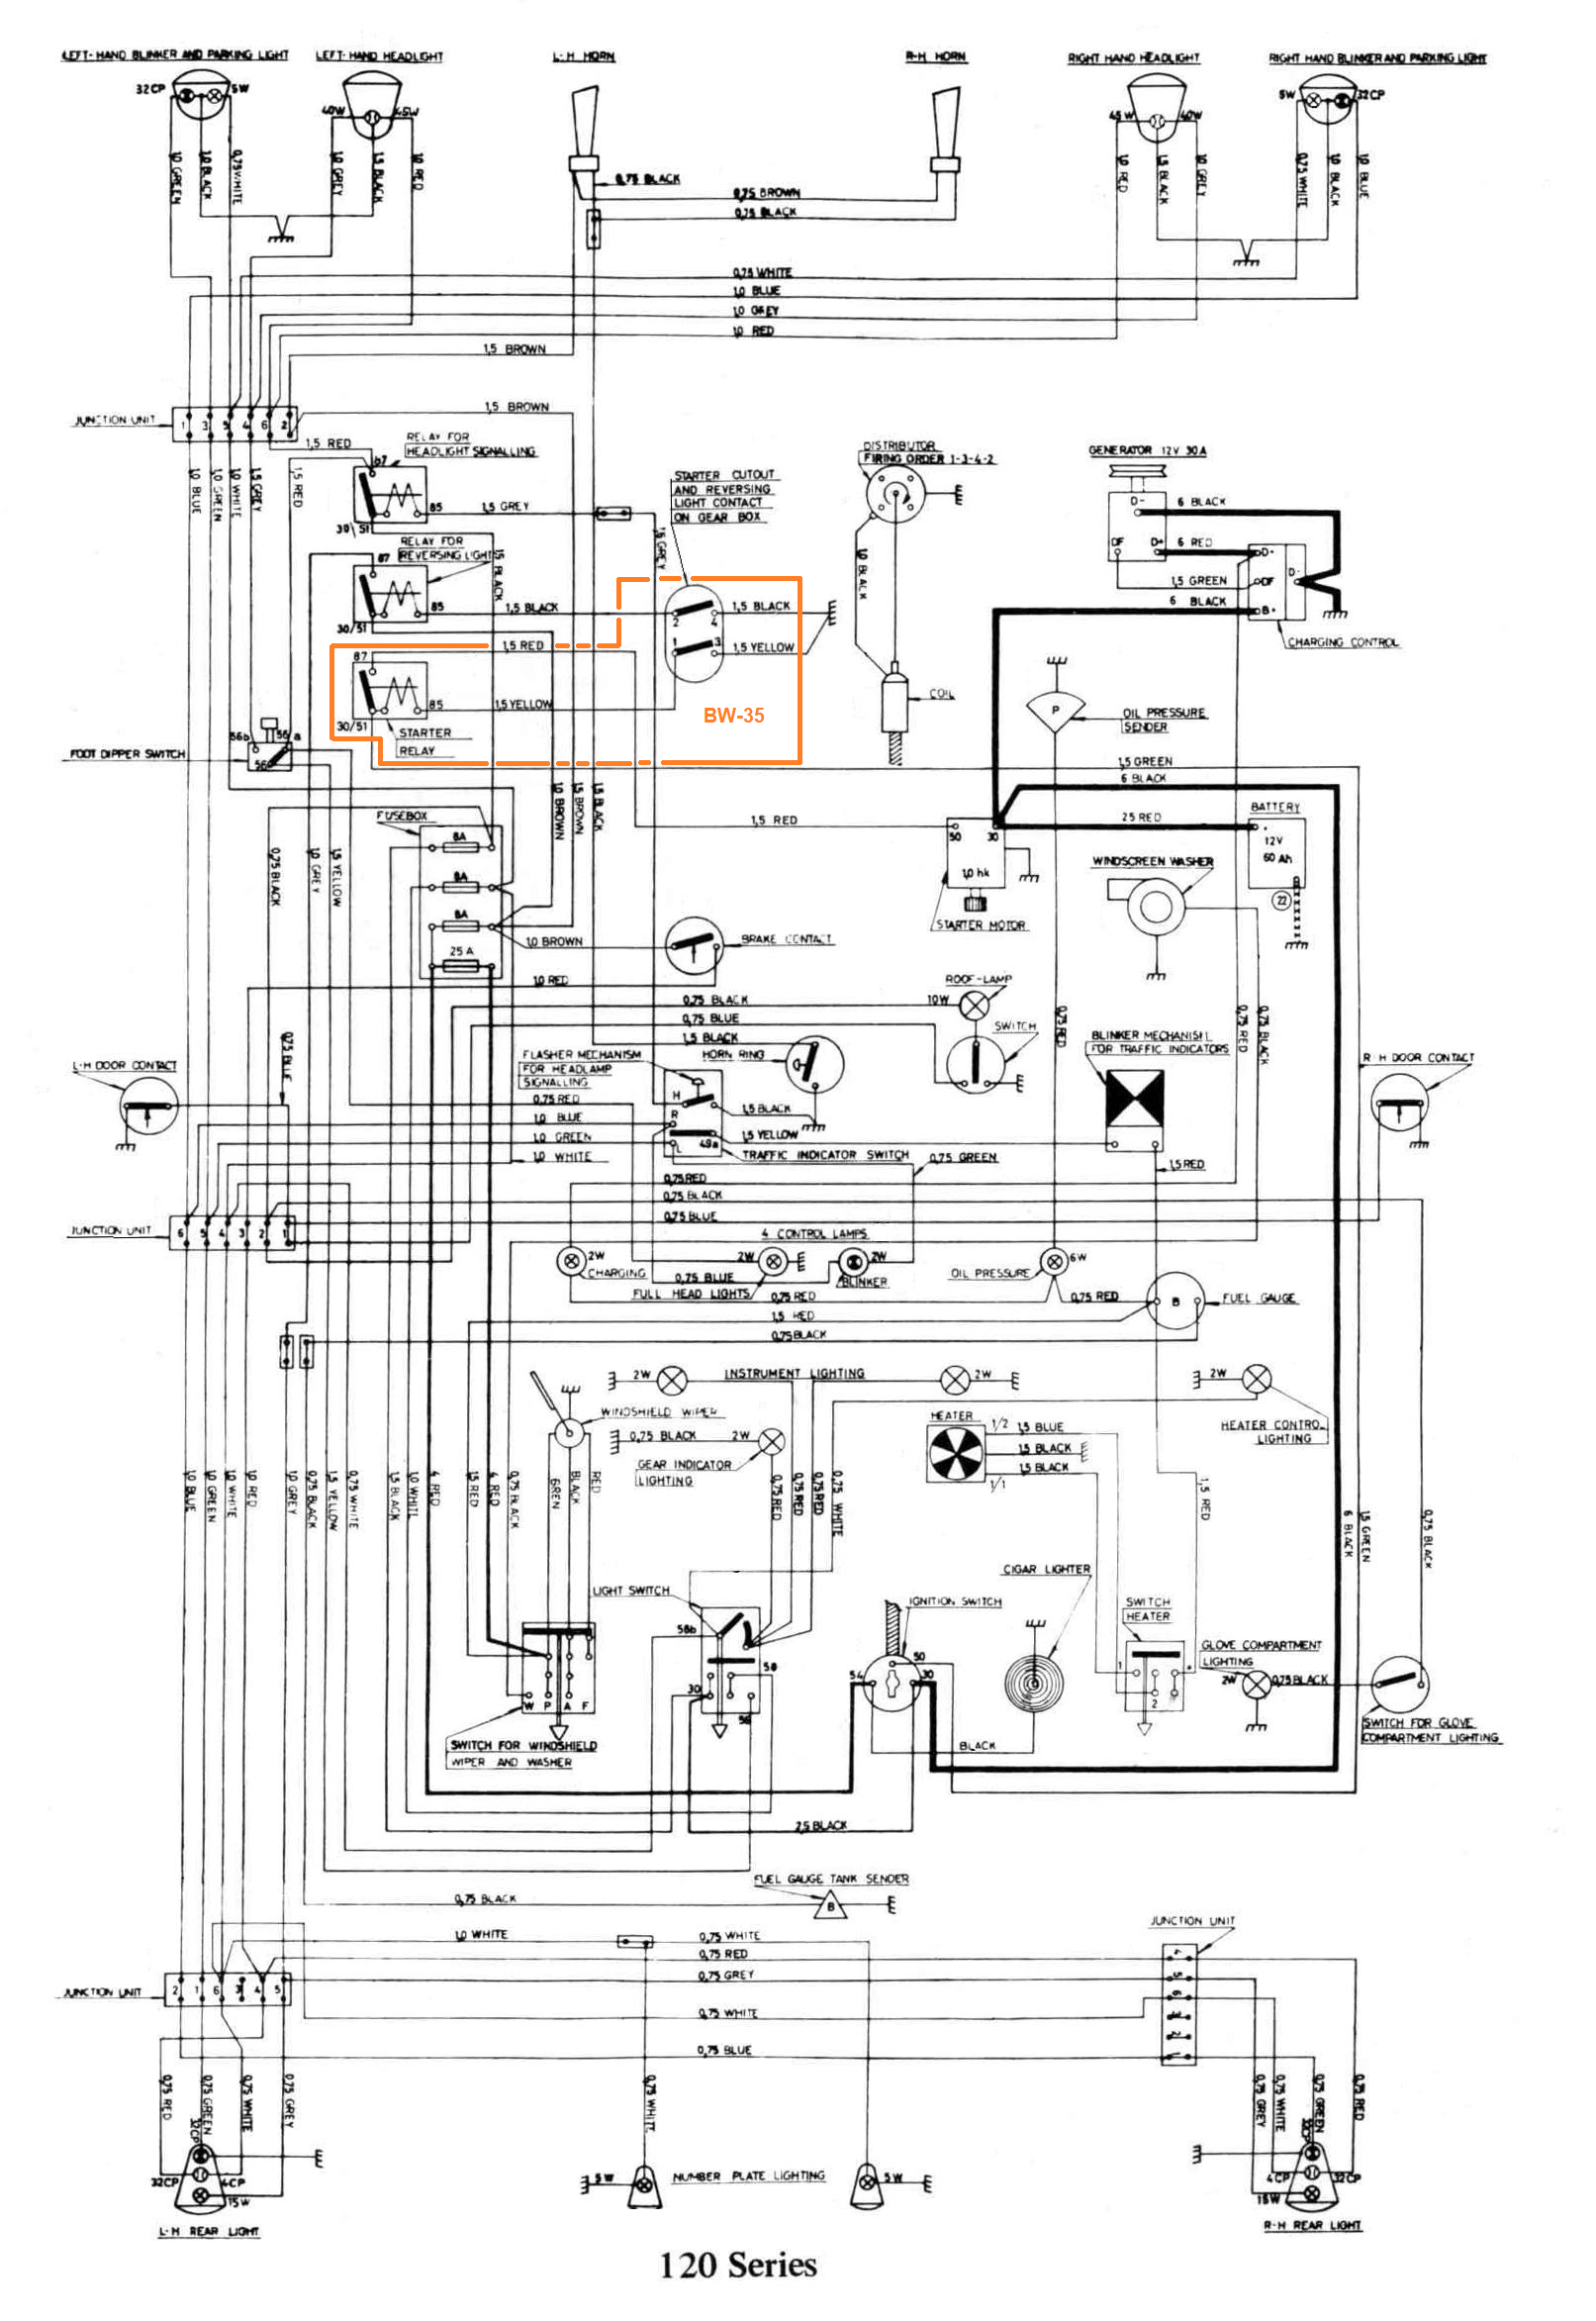 2005 Volvo Truck Wiring Diagrams Wiring Diagram Cabling Name Cabling Name Ristorantegorgodelpo It